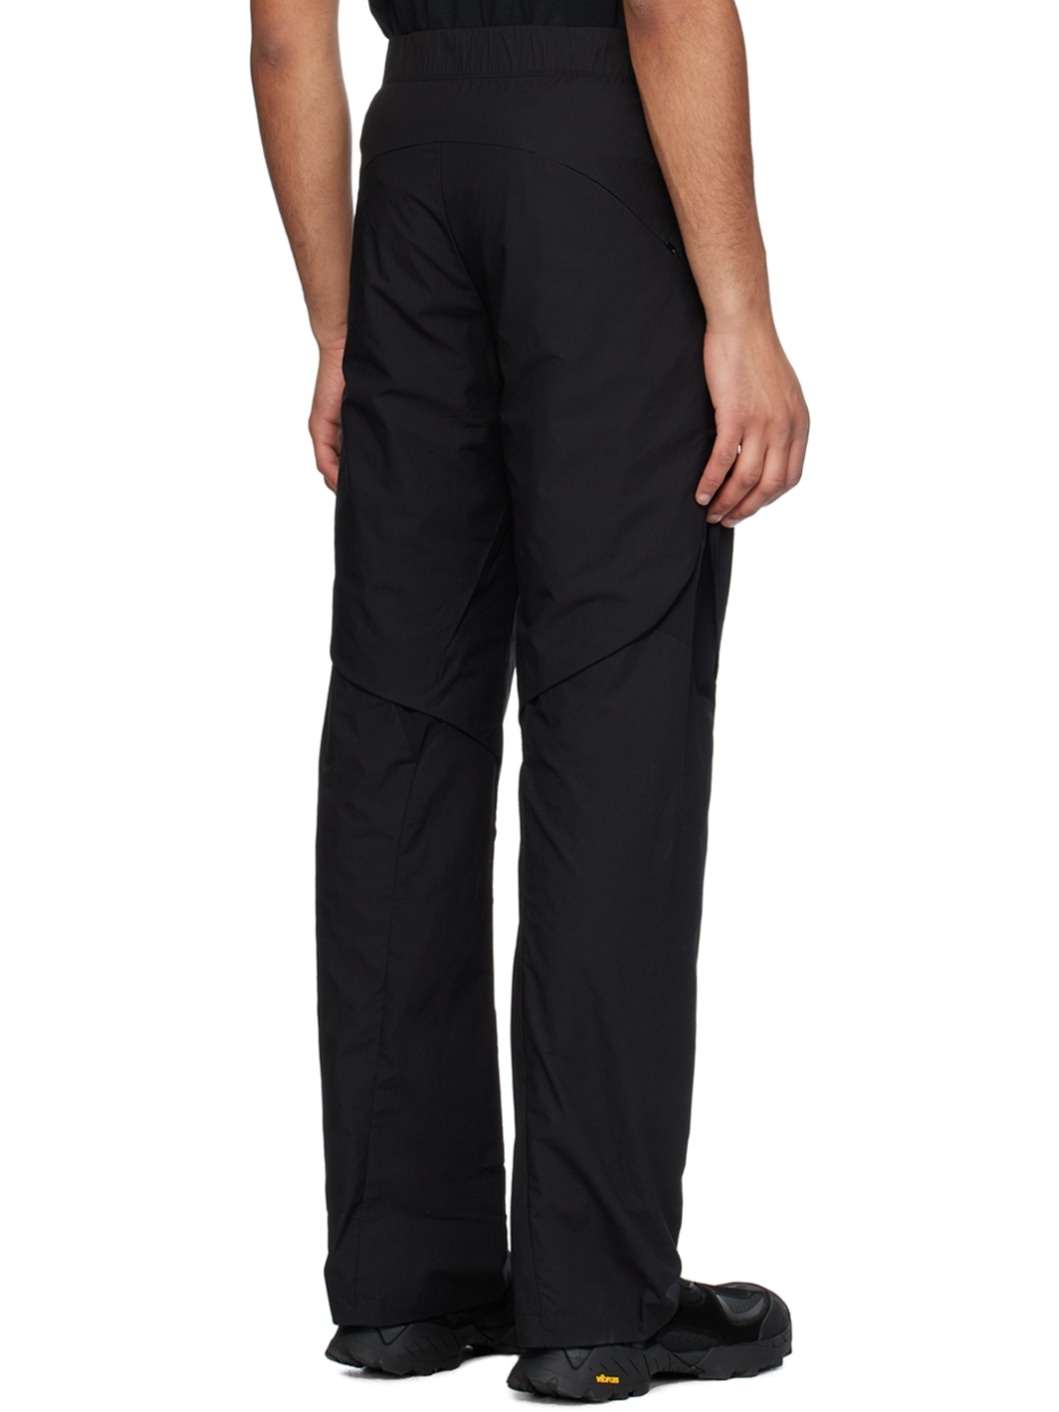 Black 6.0 Center Technical Trousers - 3